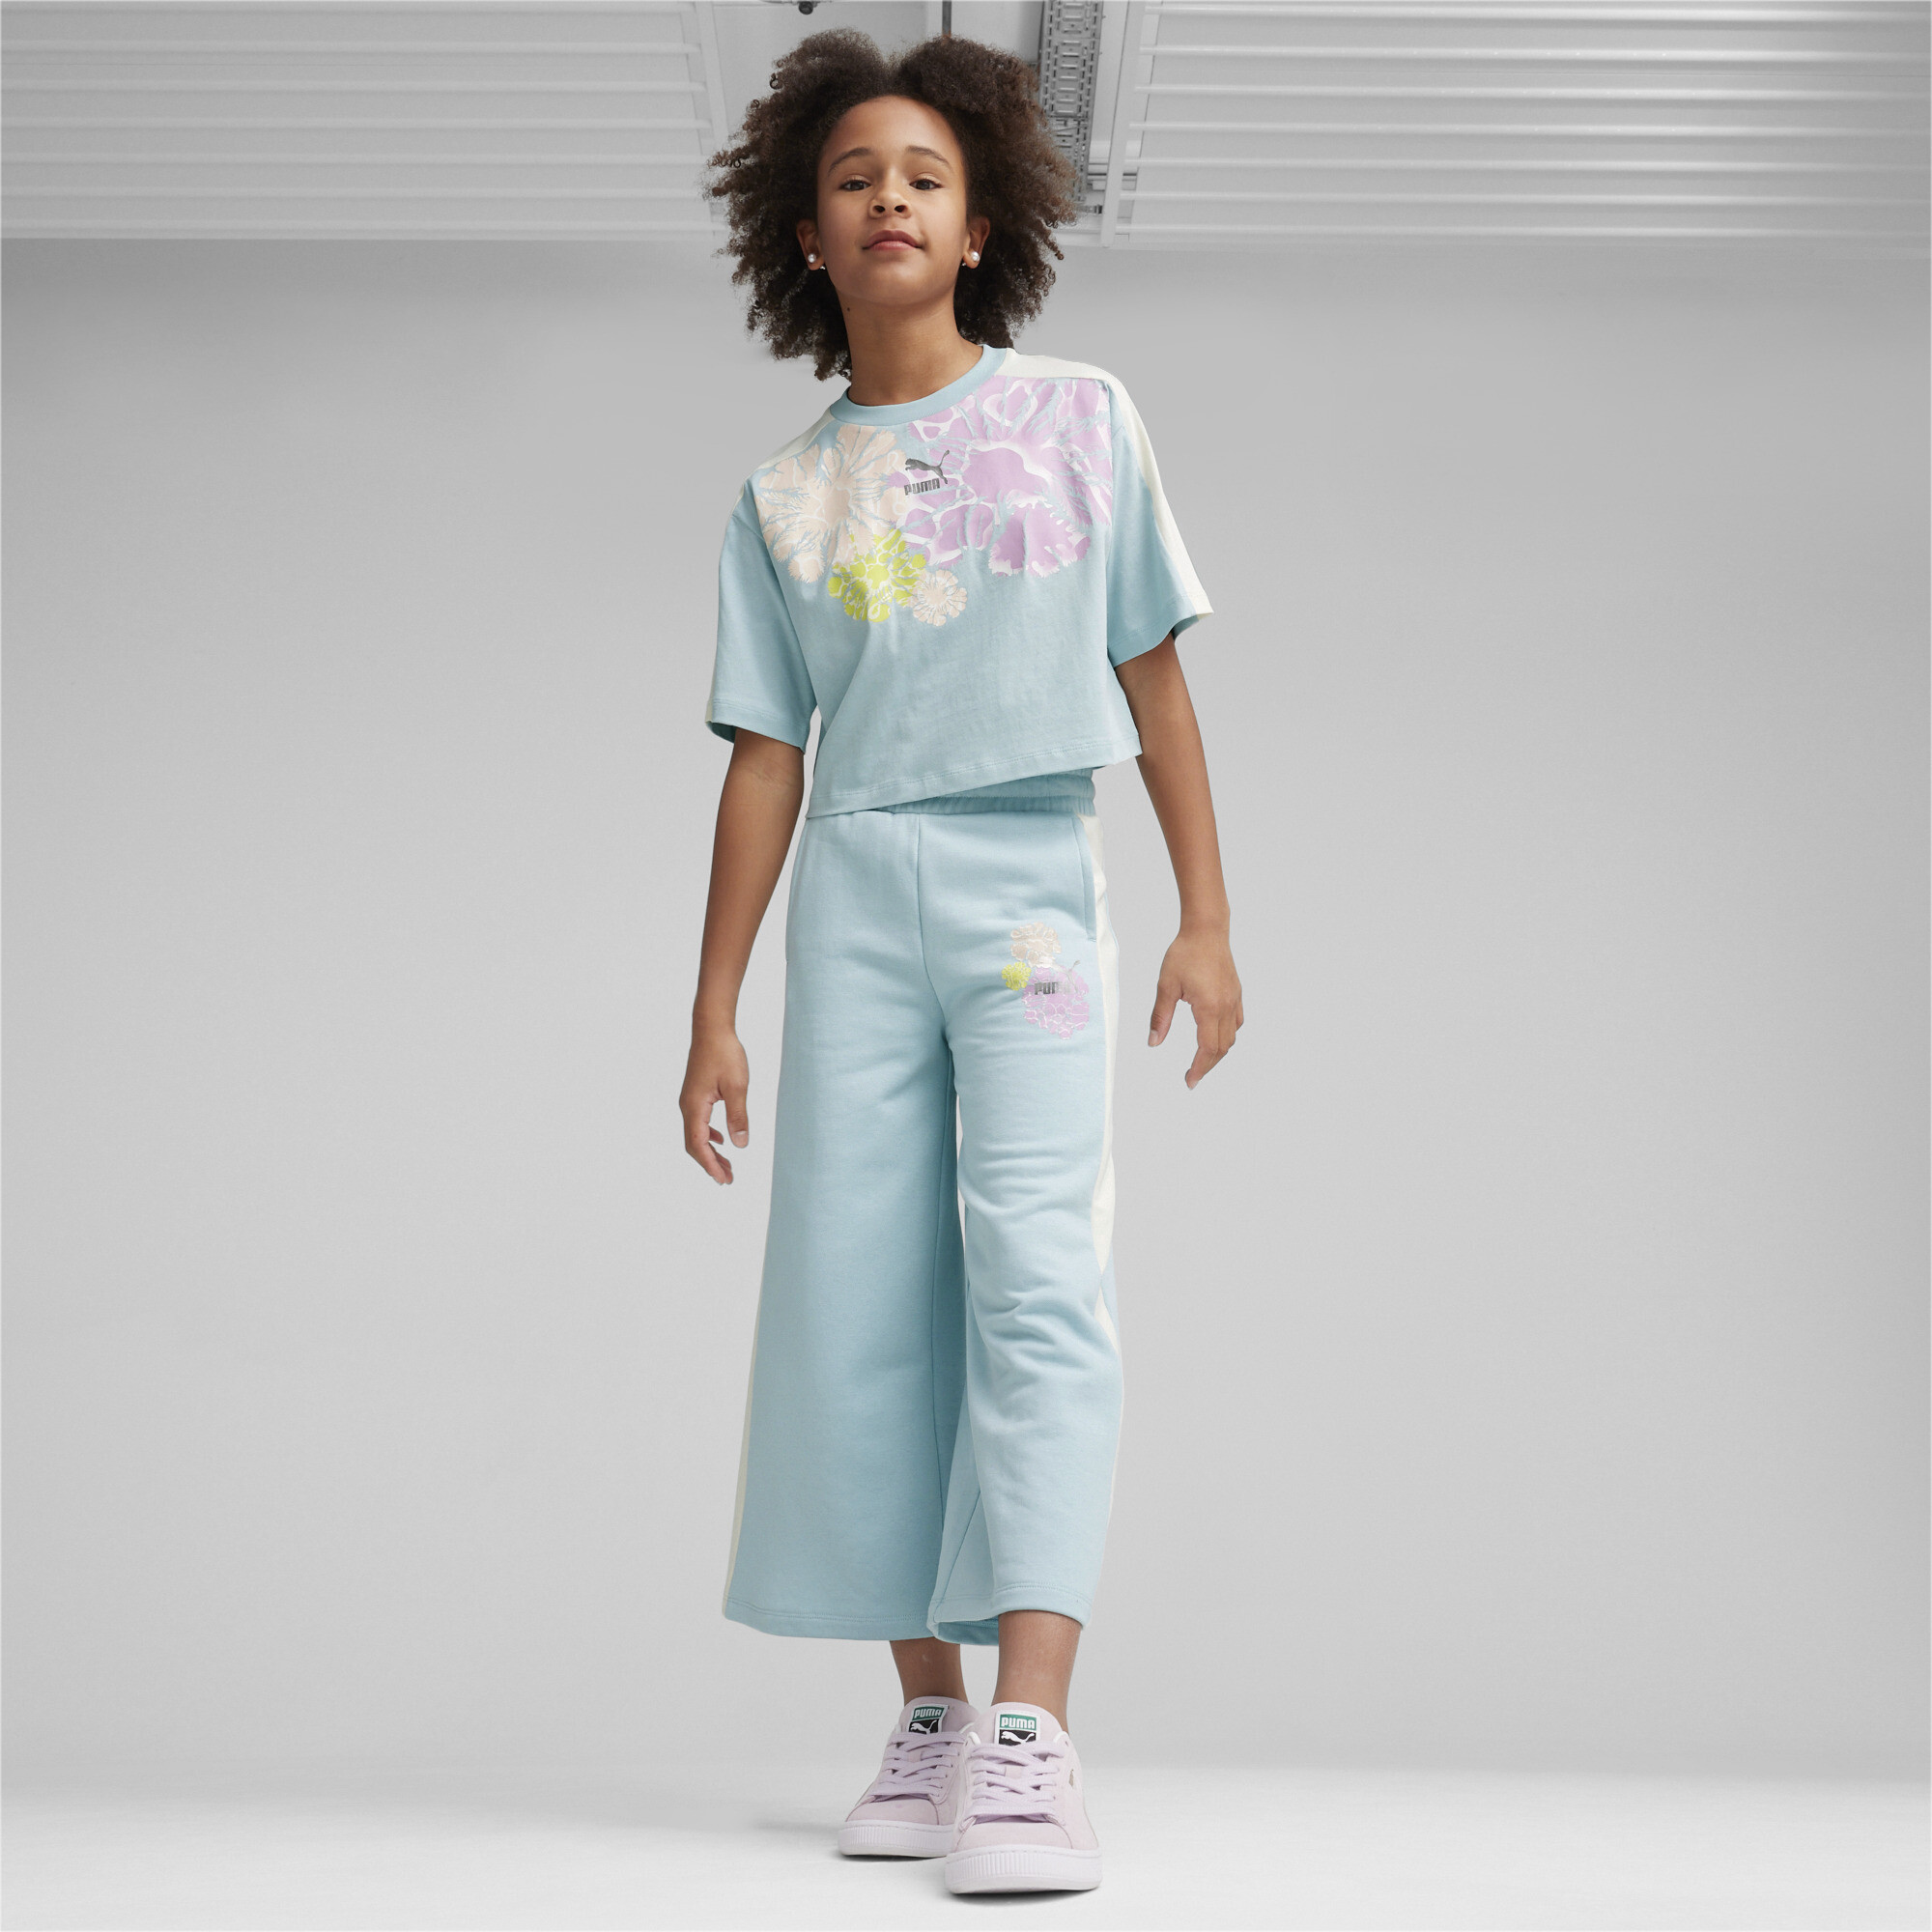 Puma T7 SNFLR Girls' Graphic T-Shirt, Blue, Size 11-12Y, Age